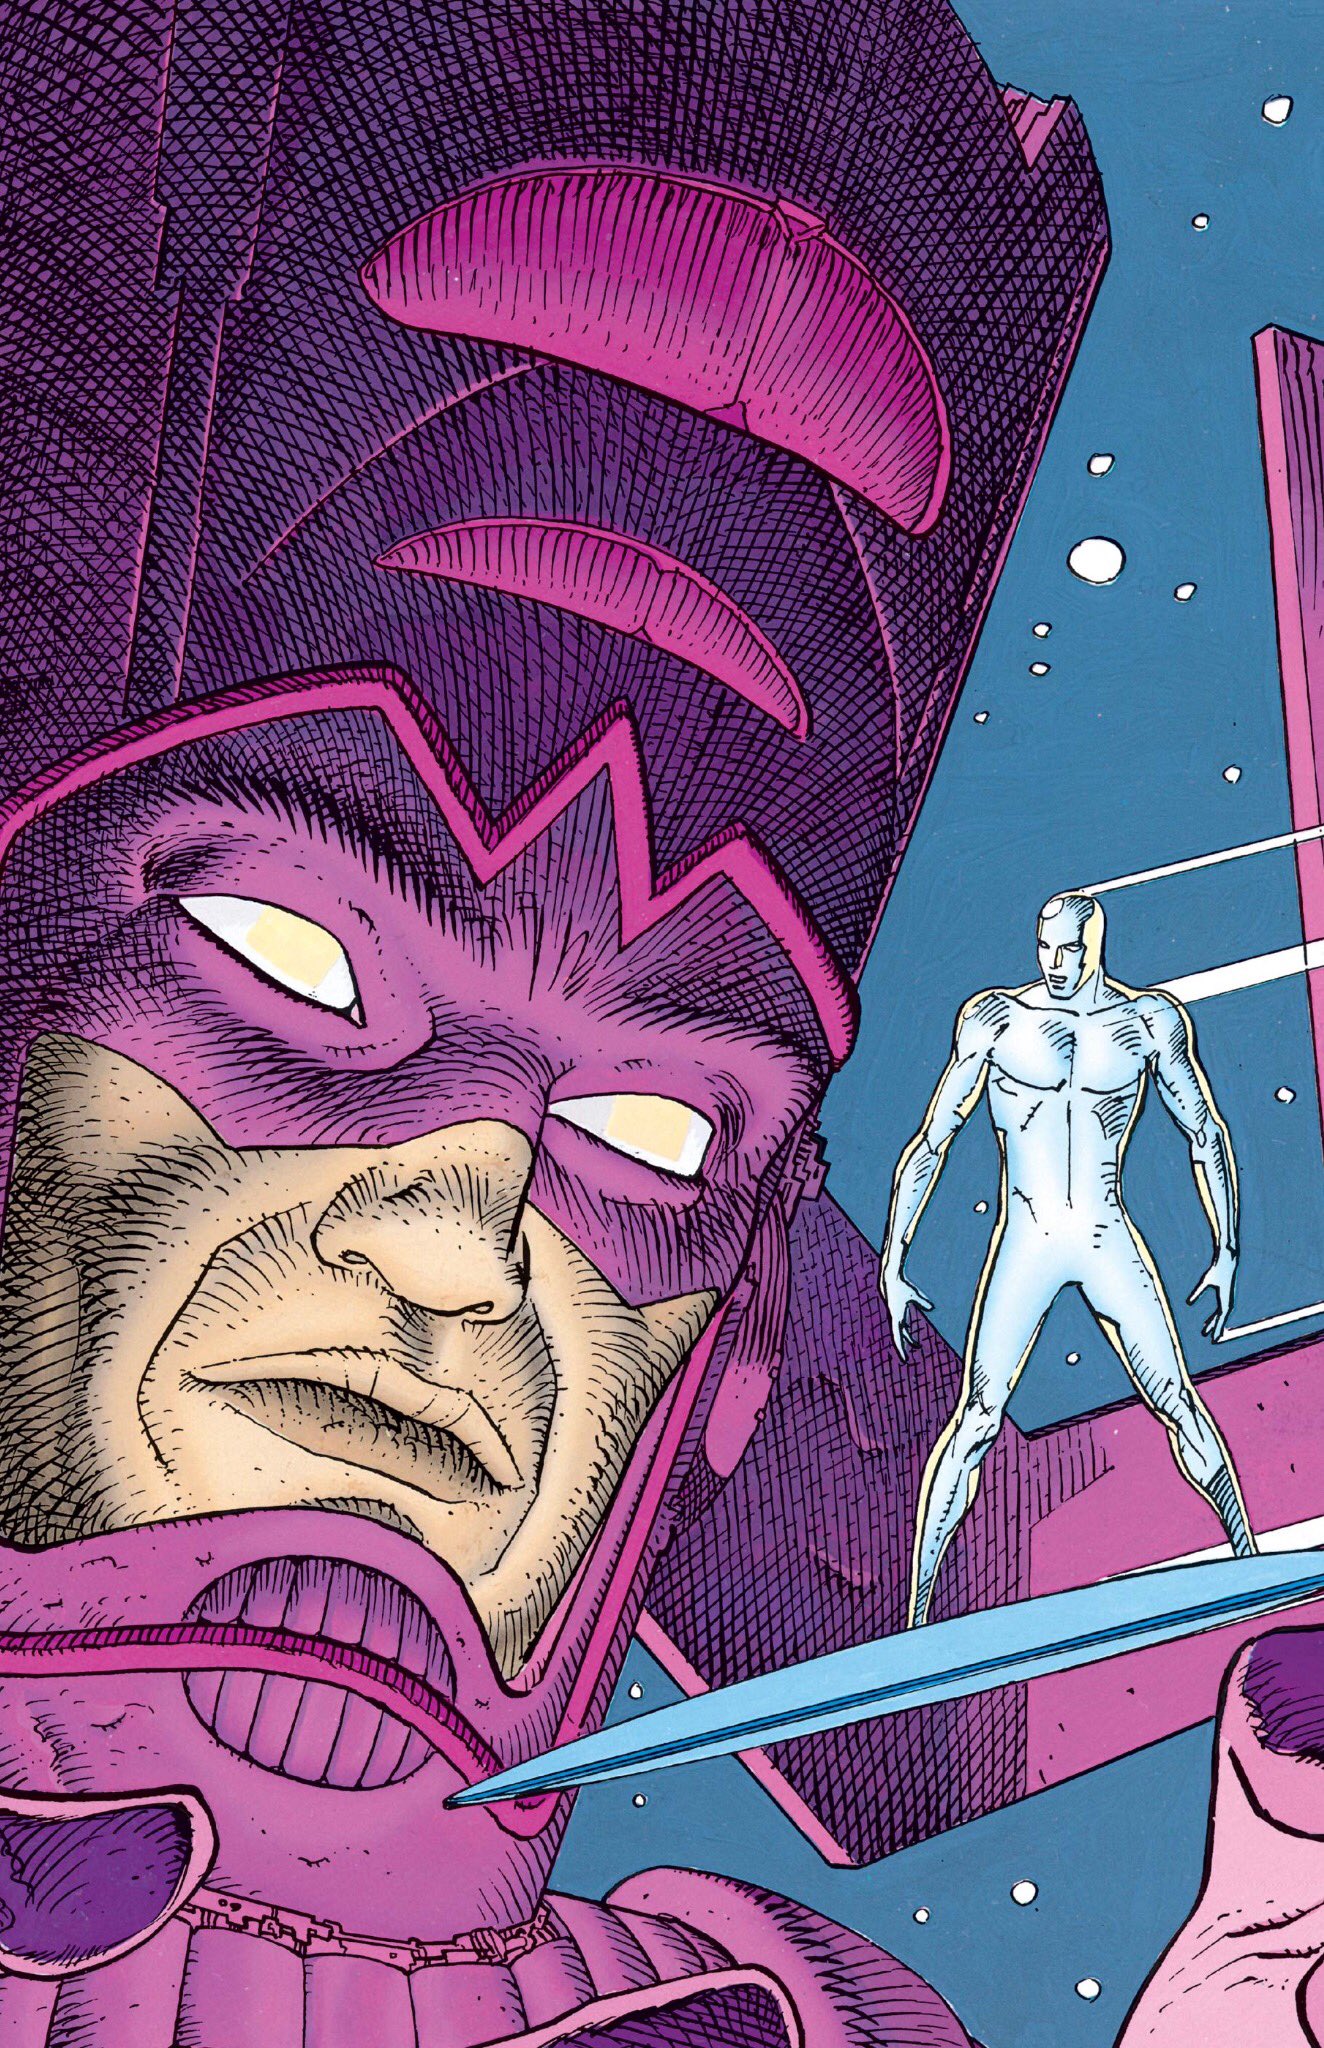 Cool Comic Art on X: "Galactus / Silver Surfer by Moebius  https://t.co/mtGVMkVoNV" / X